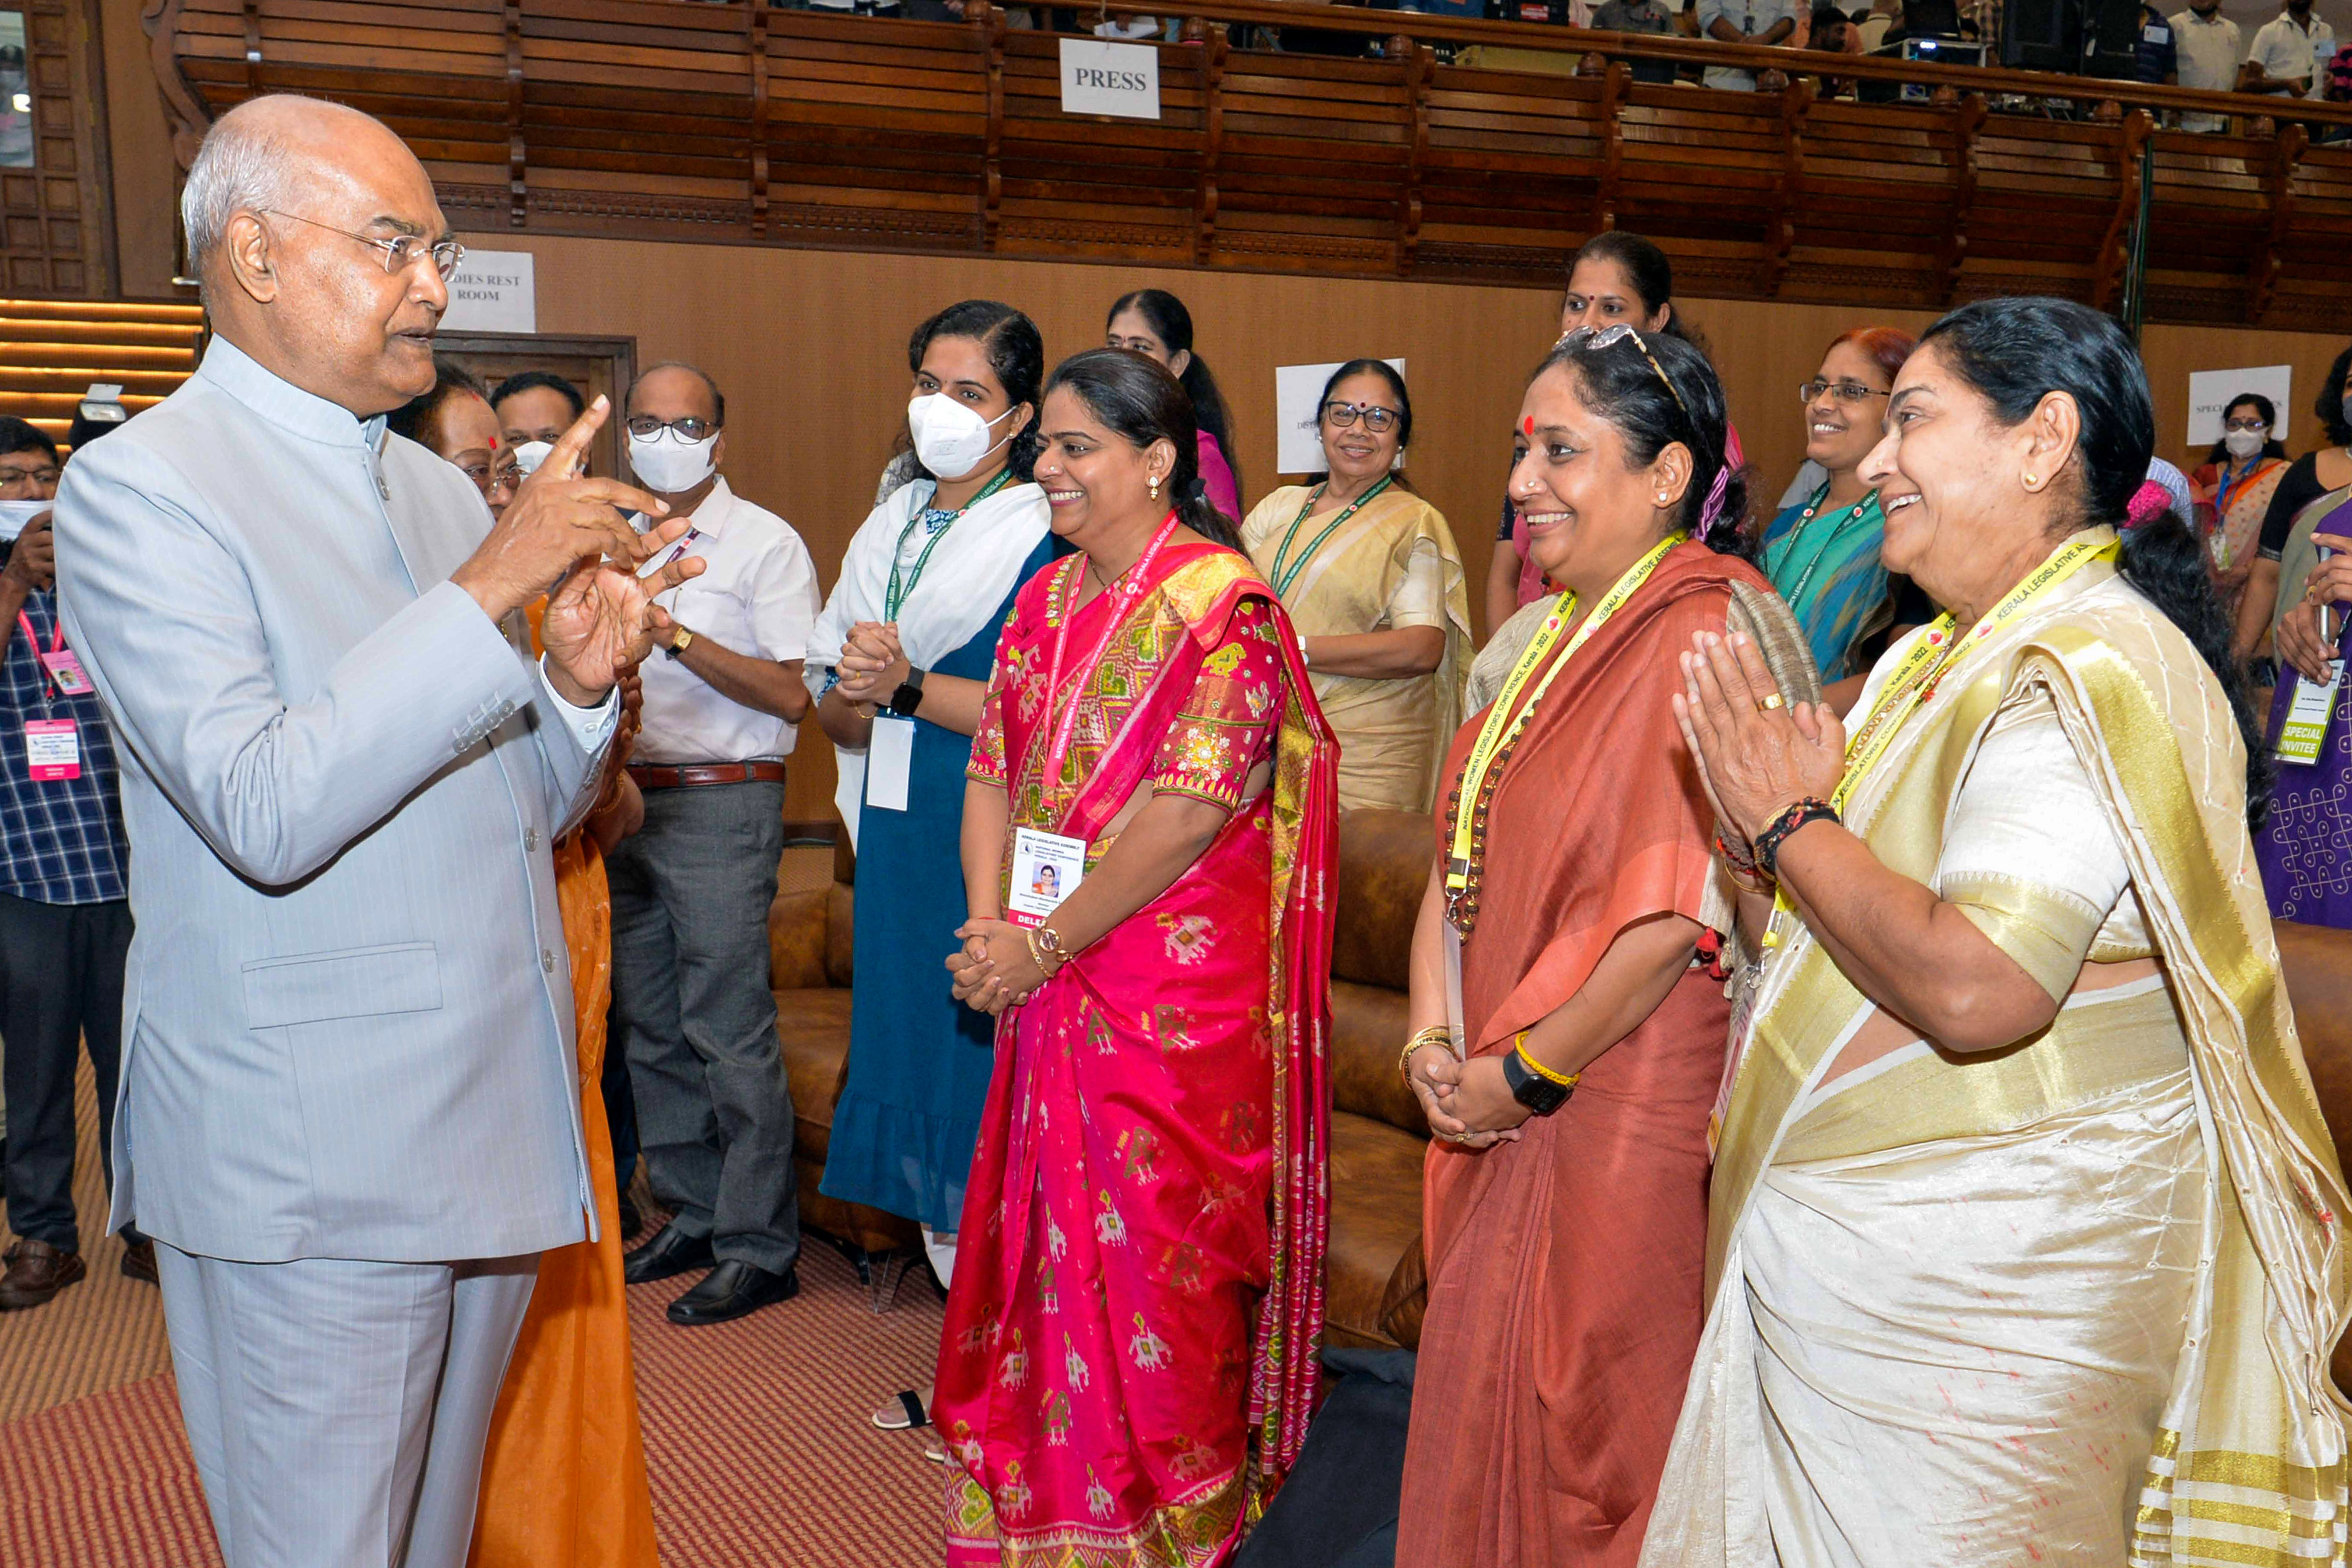 Freedom movement laid ground for gender equality: President Ram Nath Kovind